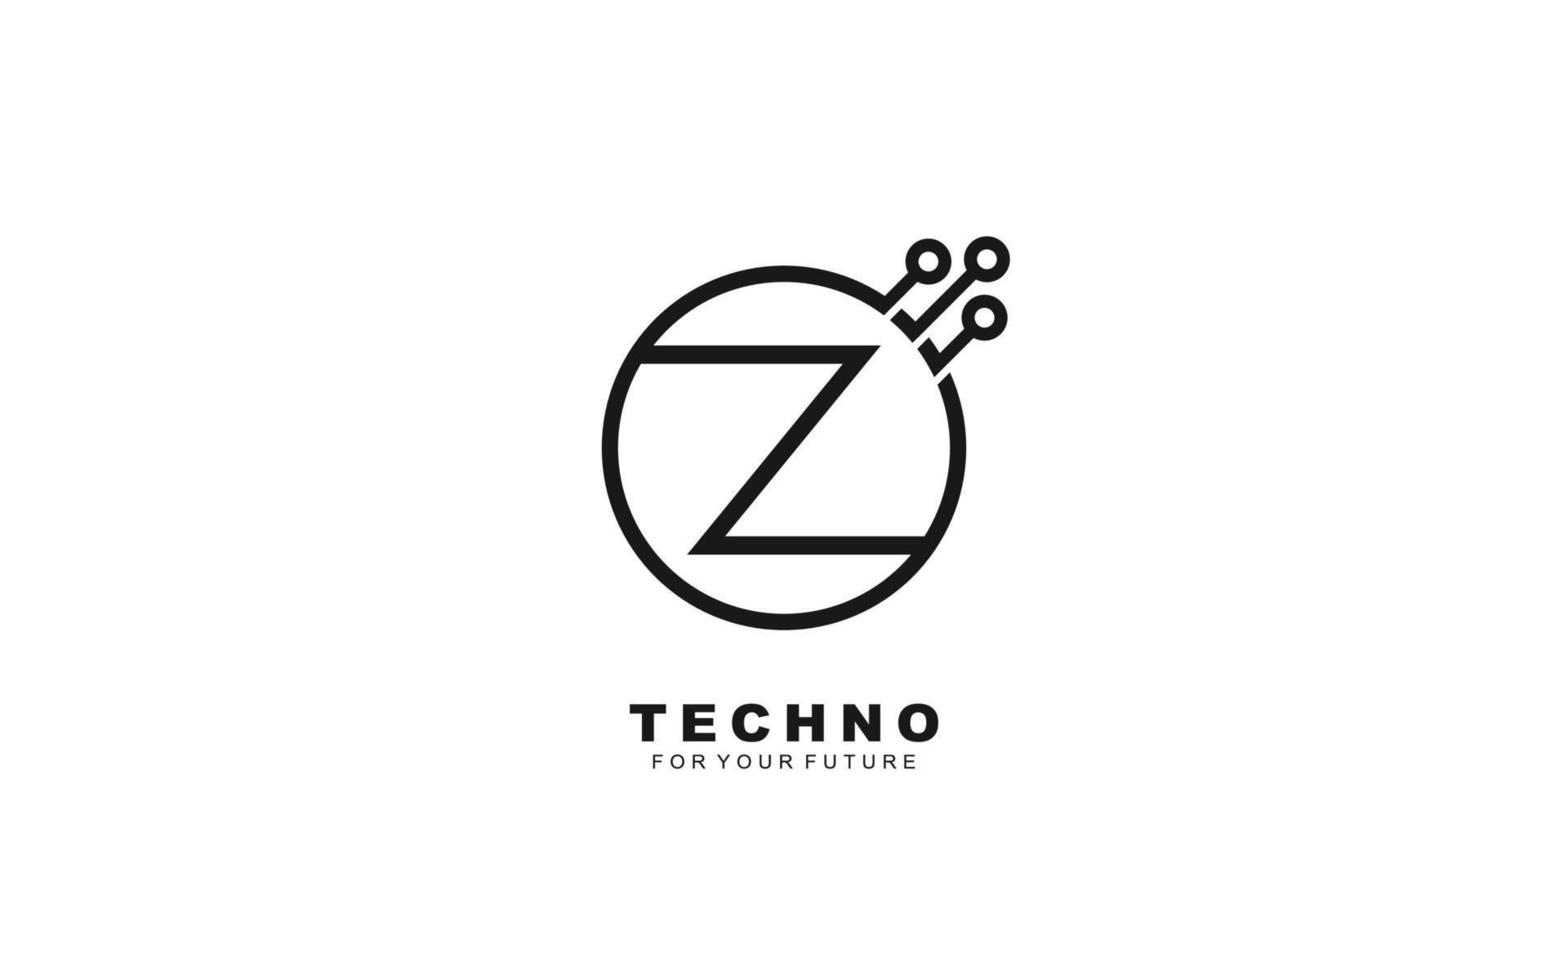 Z logo TECHNO for identity. Letter template vector illustration for your brand